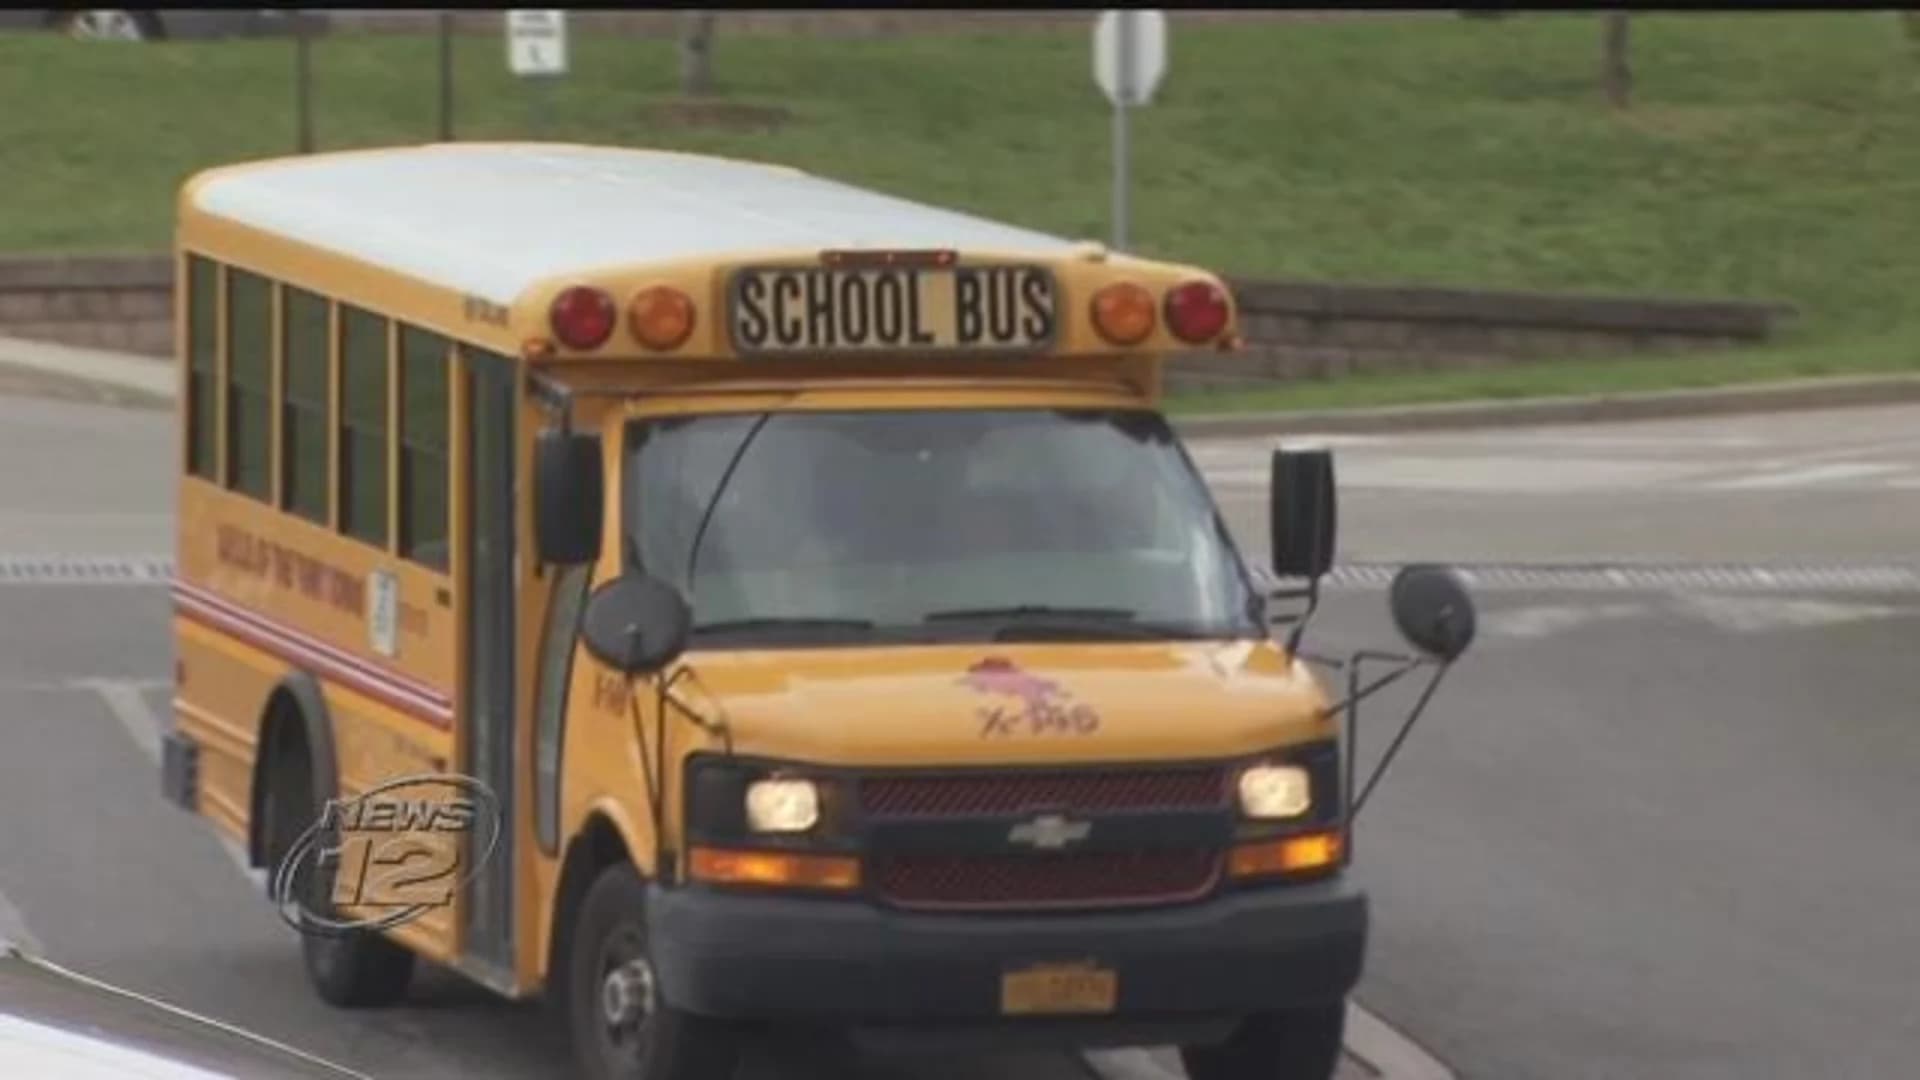 Bus driver battle leaves 1 suspended, 1 back at school